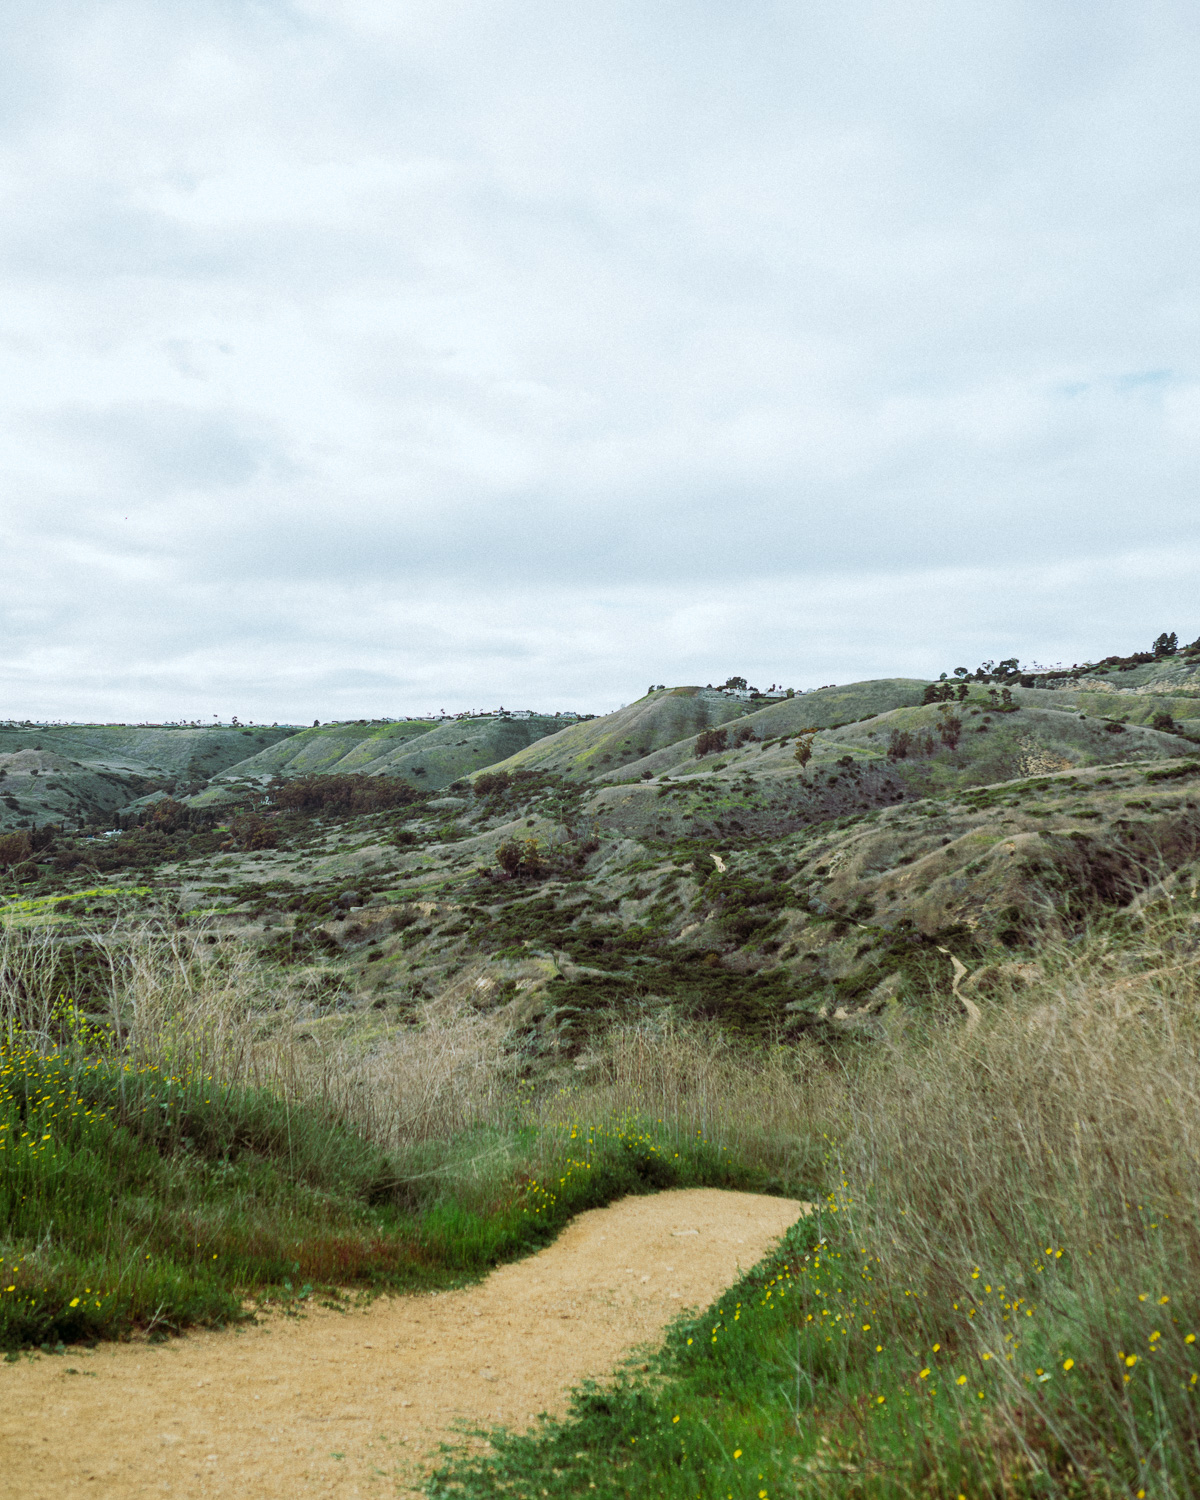 Rachel Off Duty: Hiking Trails in Palos Verdes